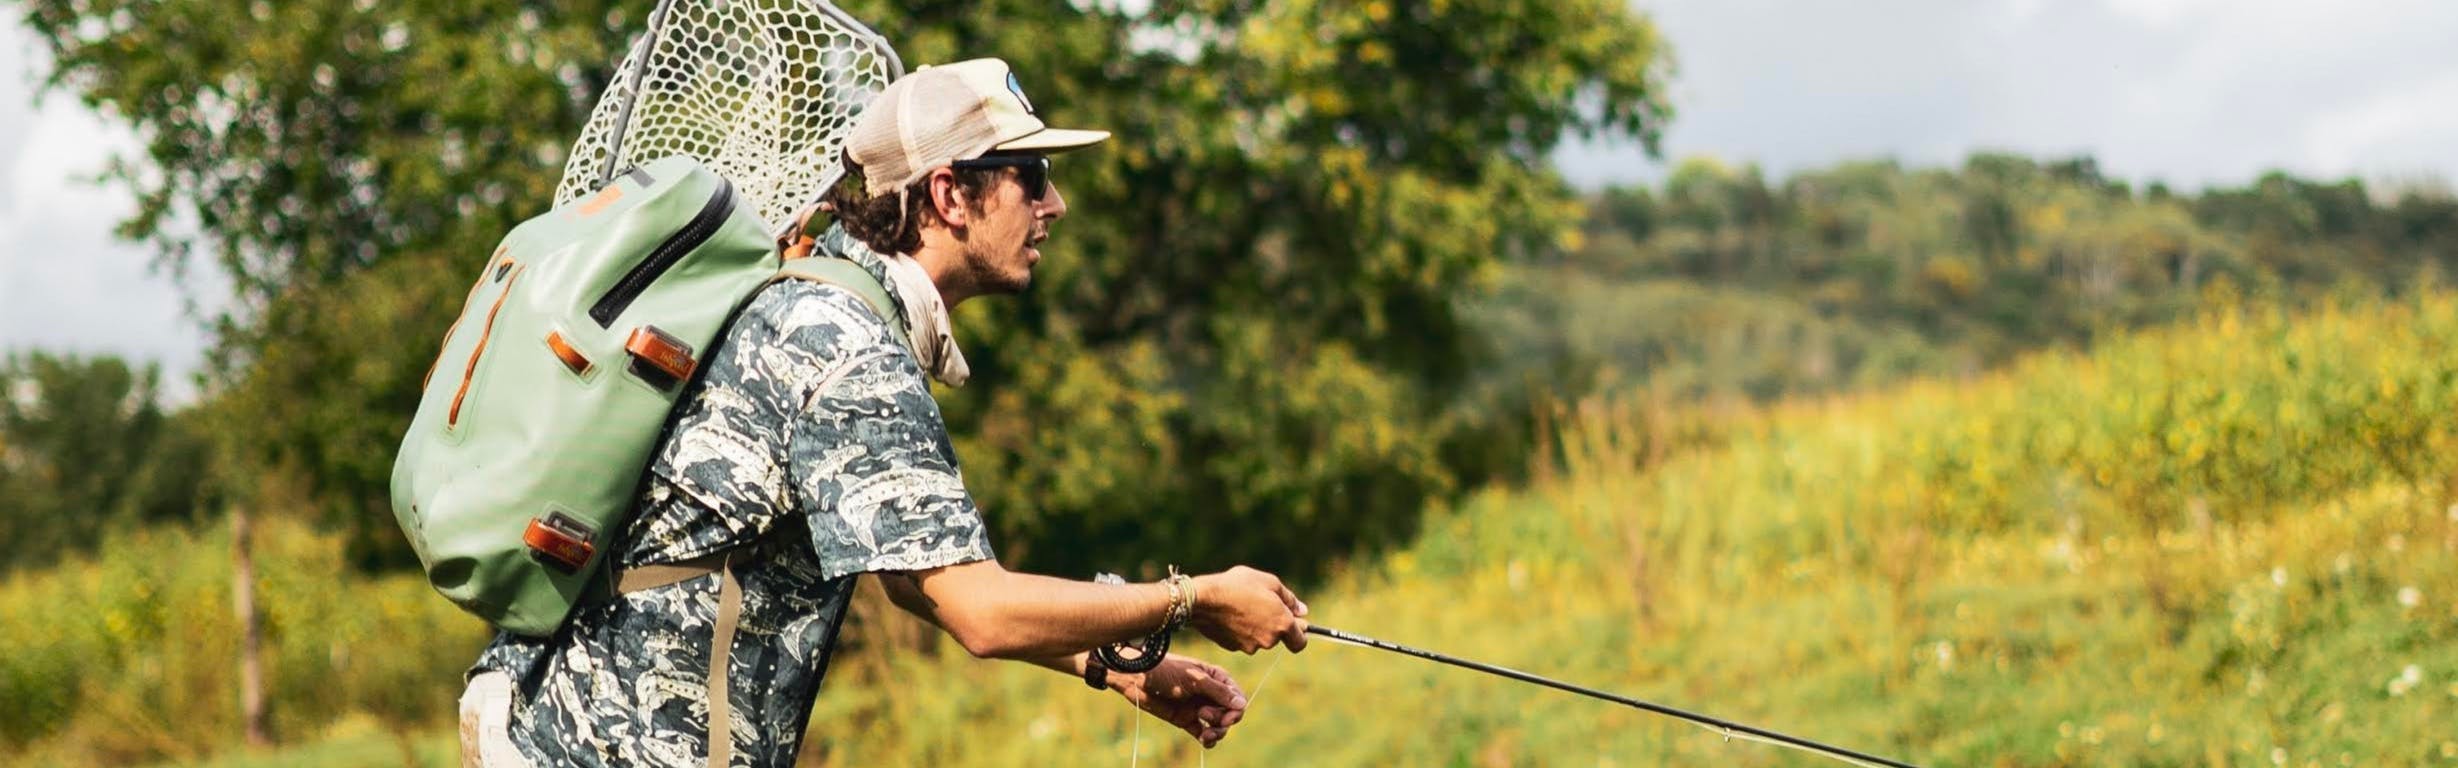 Choosing the Best Fly Fishing Pack: Chest, Sling, or Something Else?